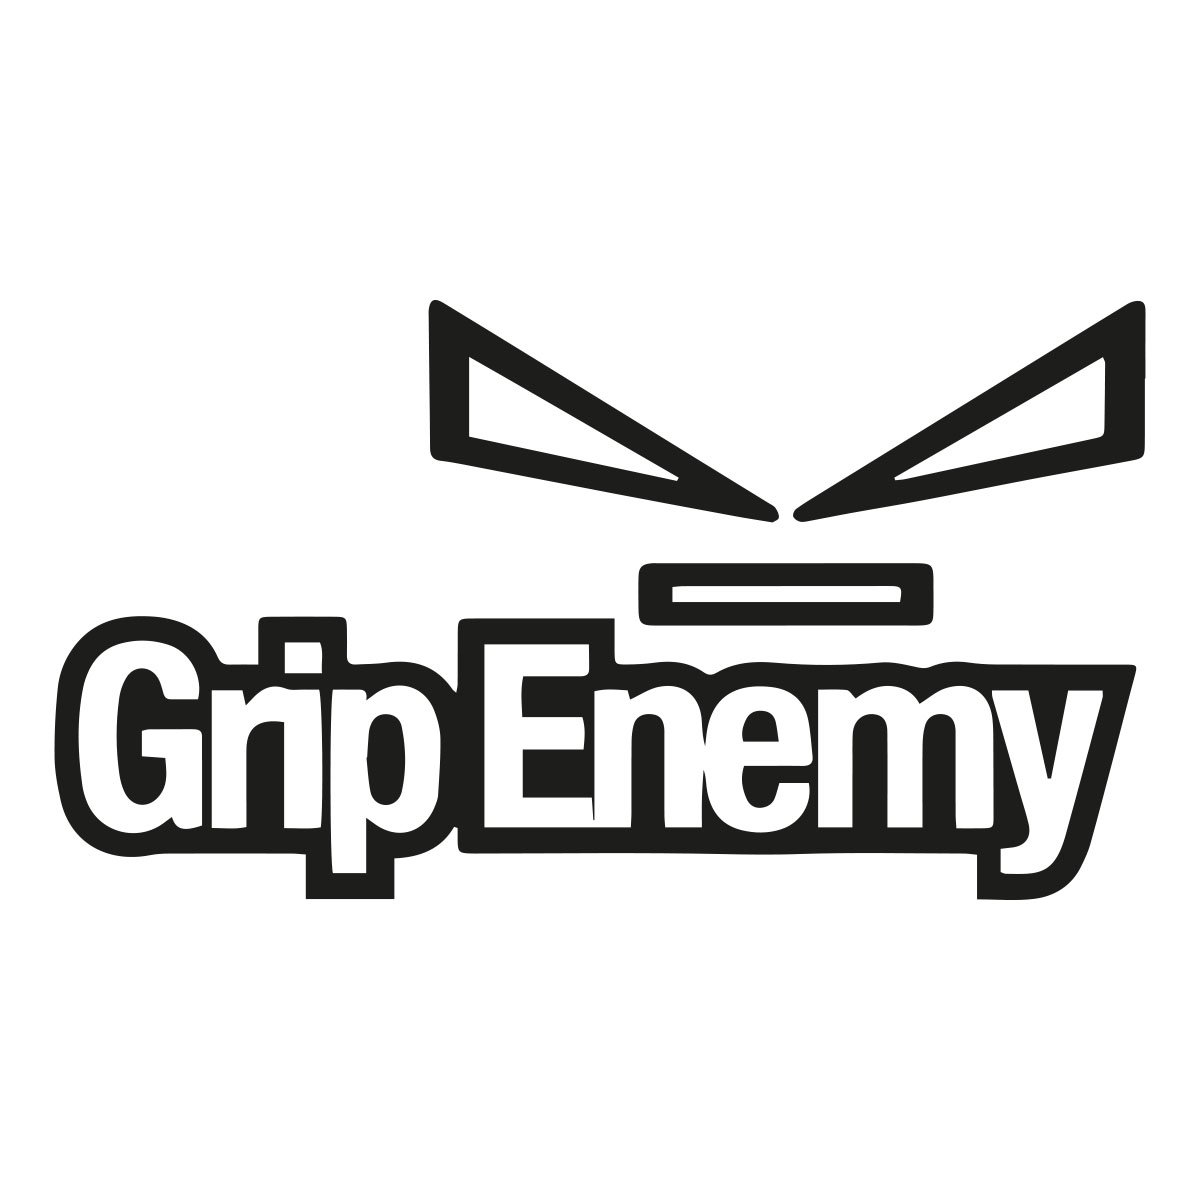 grip enemy logo